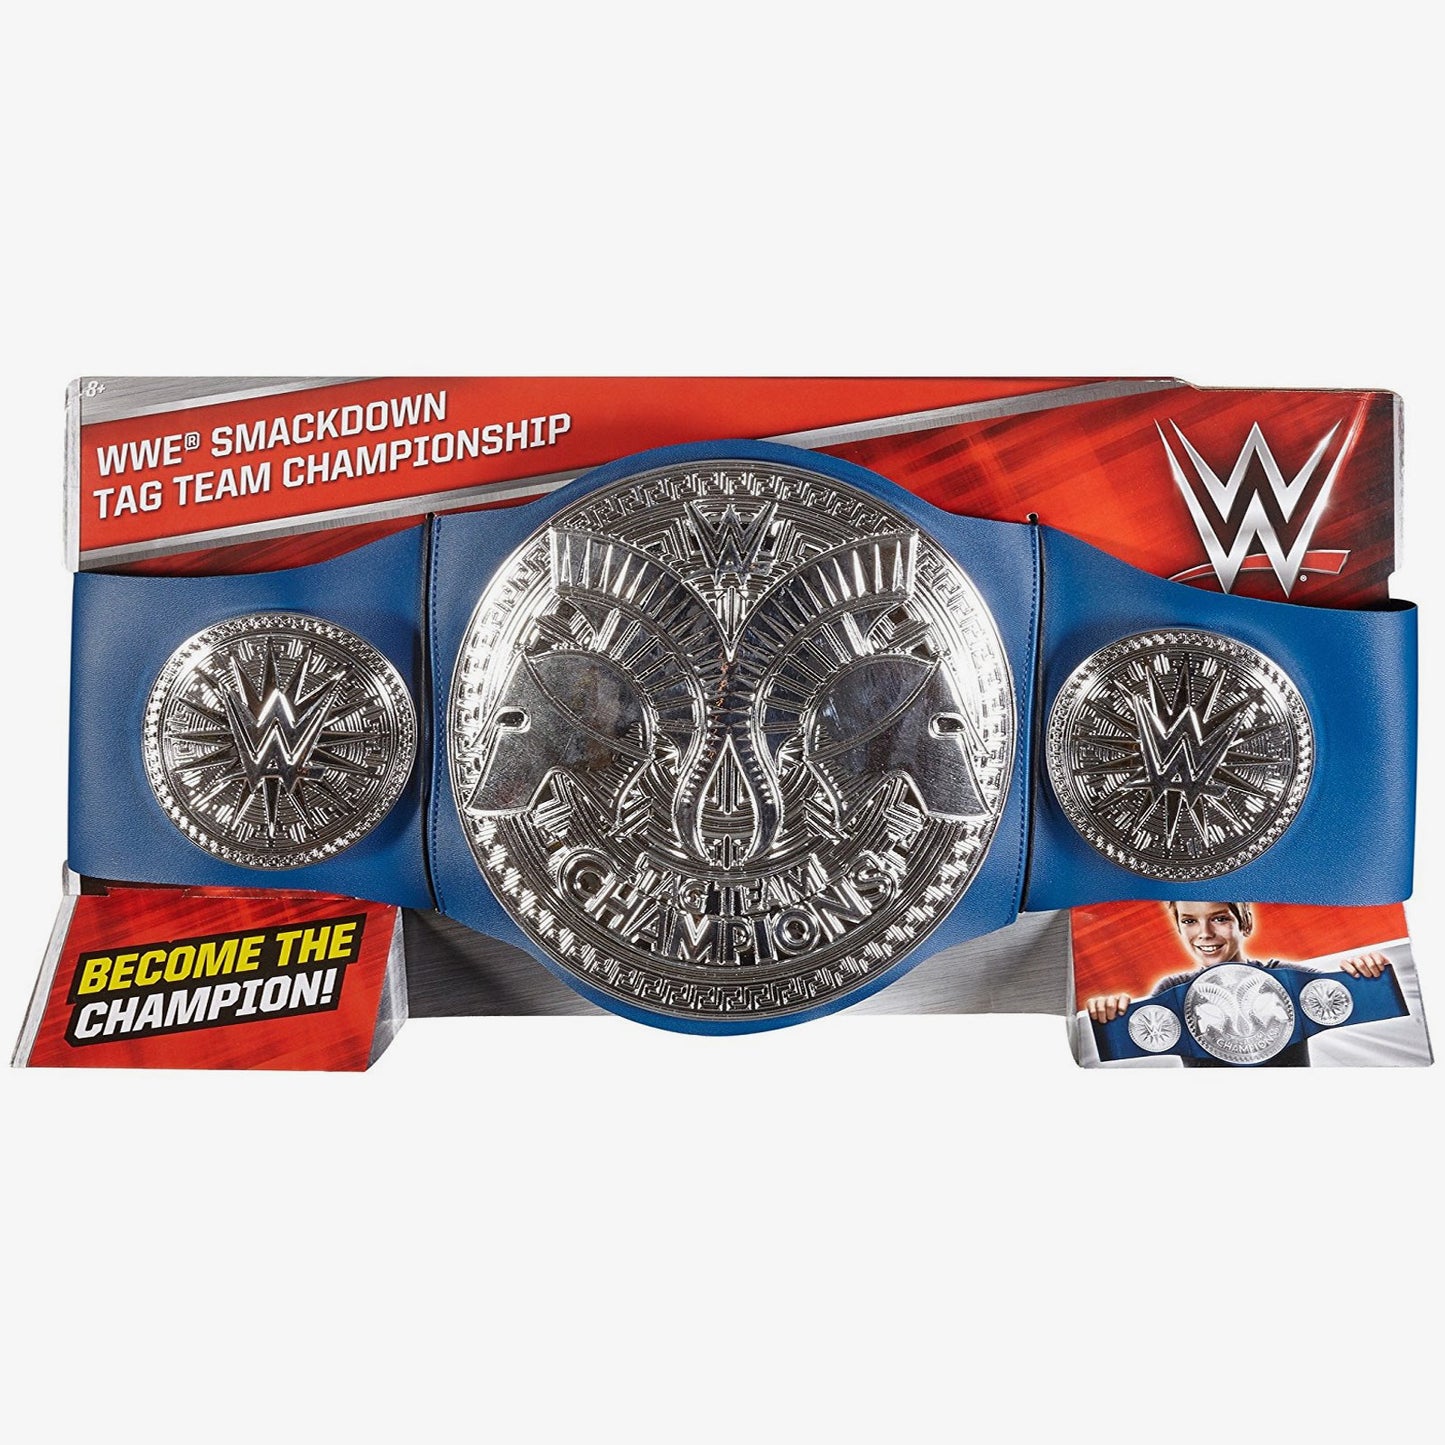 WWE SmackDown Tag Team Championship (Blue Strap)